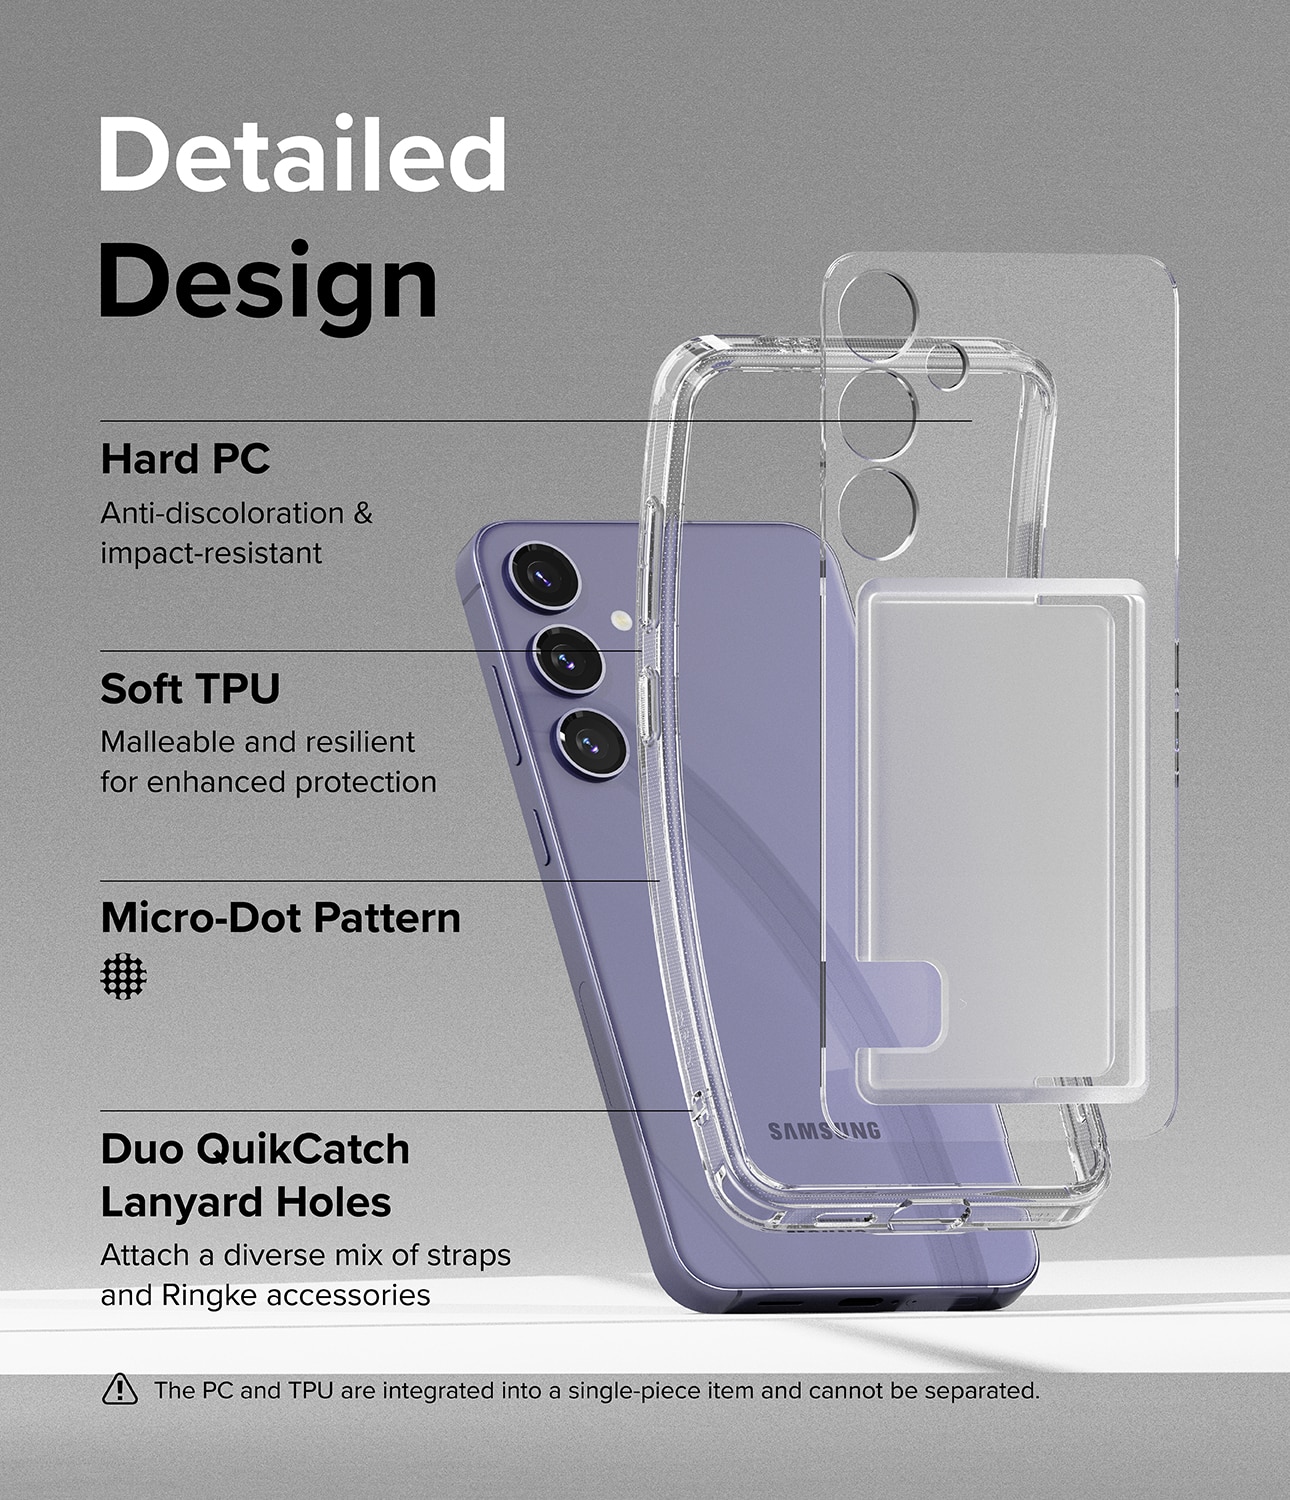 Funda Fusion Card Samsung Galaxy S24 Plus transparente